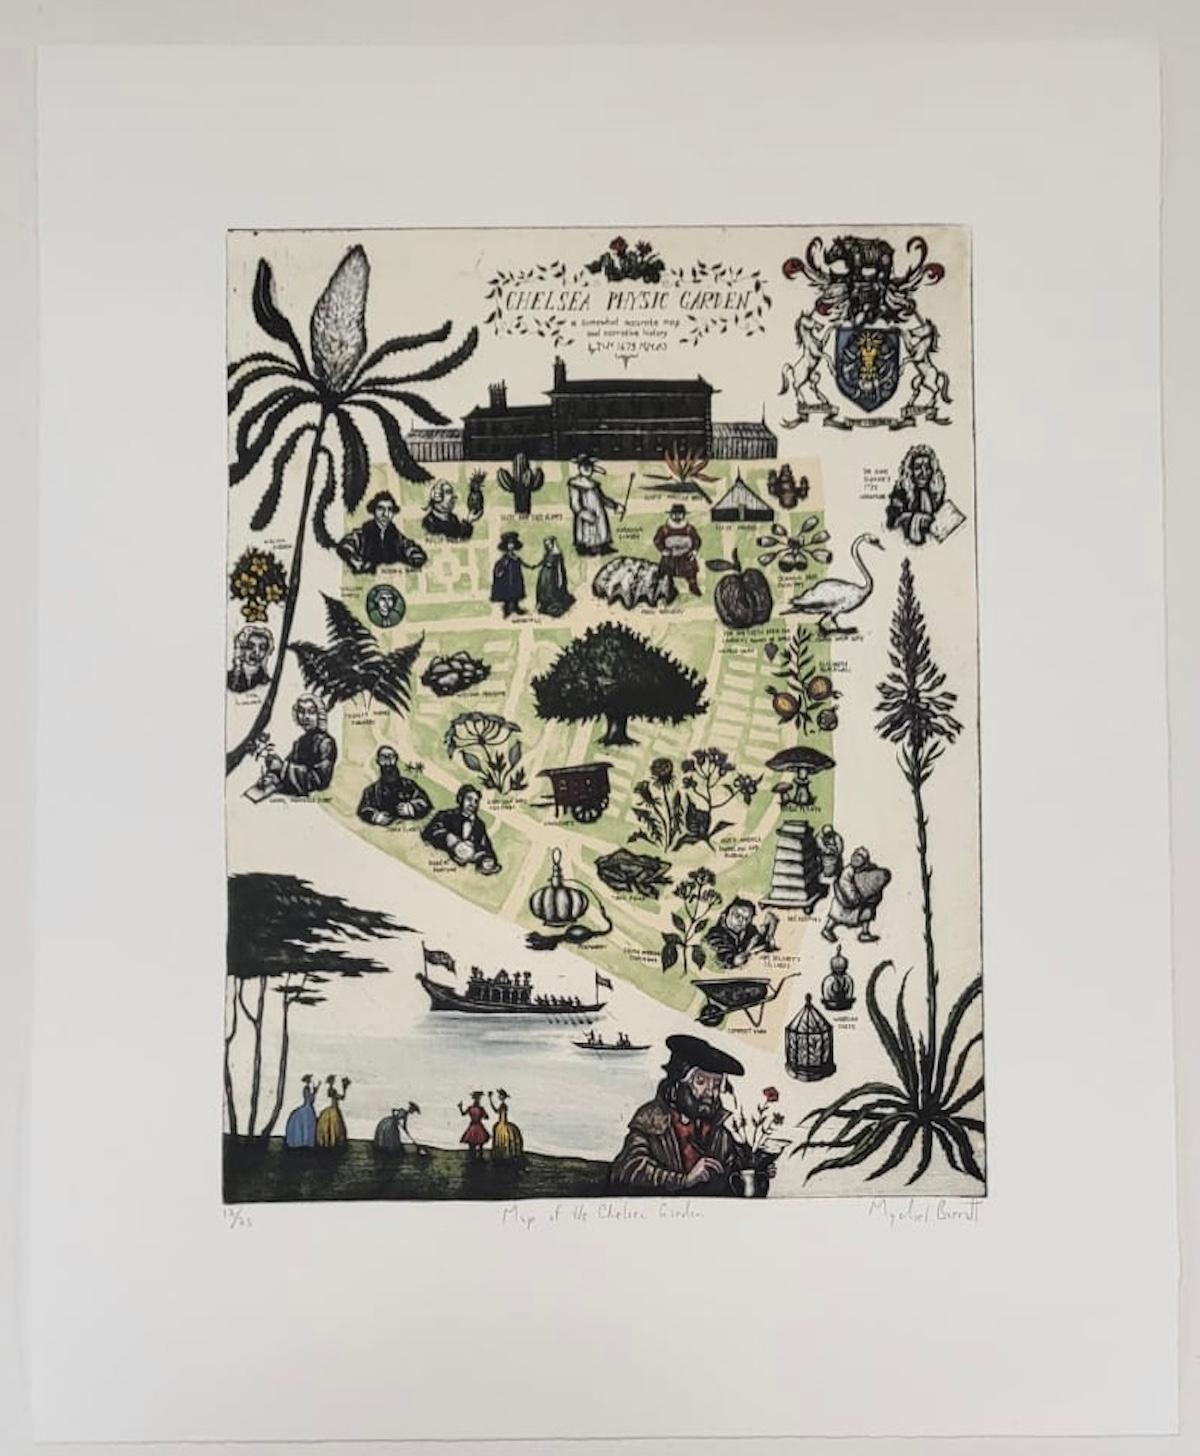 Map of the Chelsea Physic Garden - Beige Figurative Print by Mychael Barratt